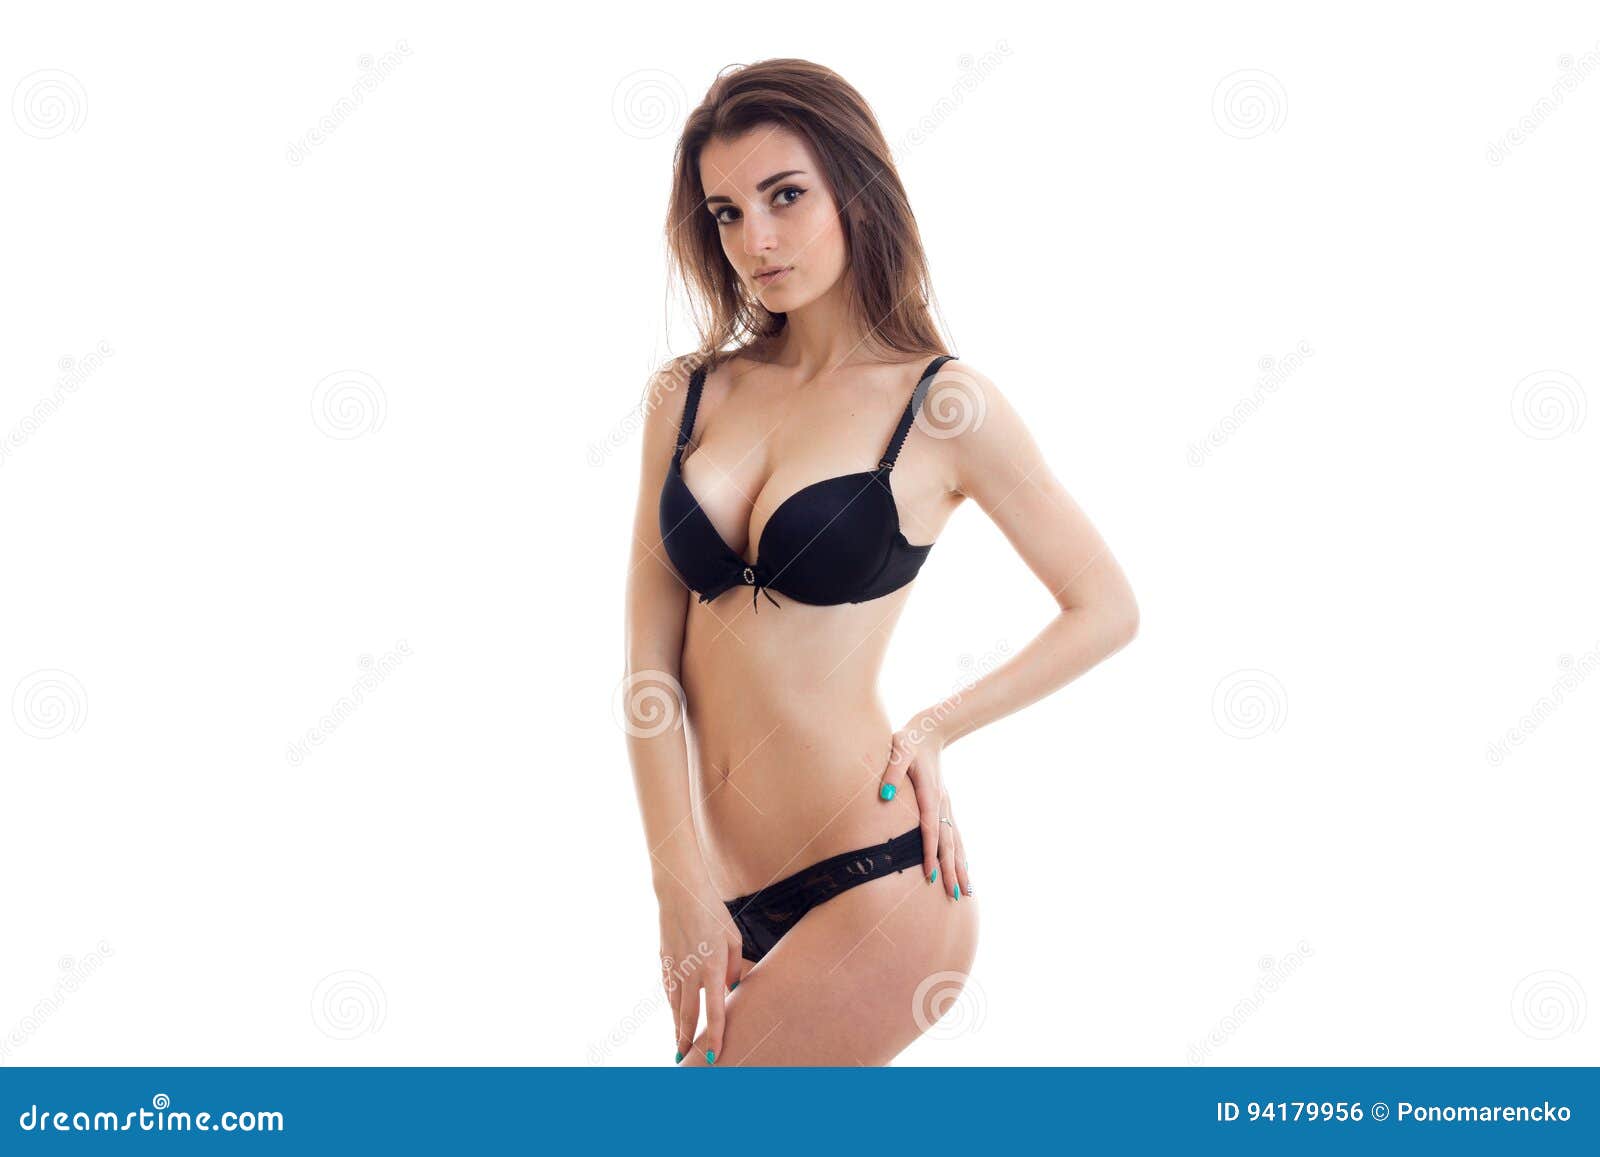 cheryl loucks recommends skinny woman big tits pic